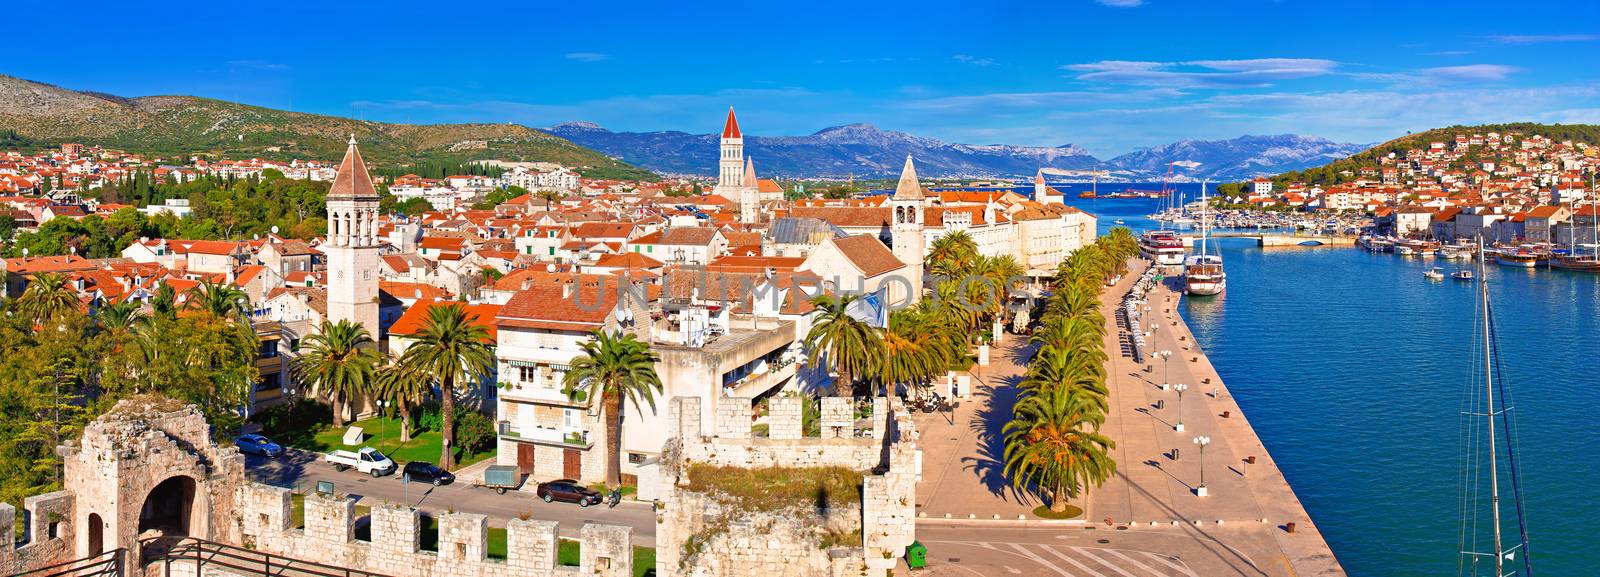 Town of Trogir waterfront and landmarks panoramic view, UNESCO world heritage site in Dalmatia region of Croatia